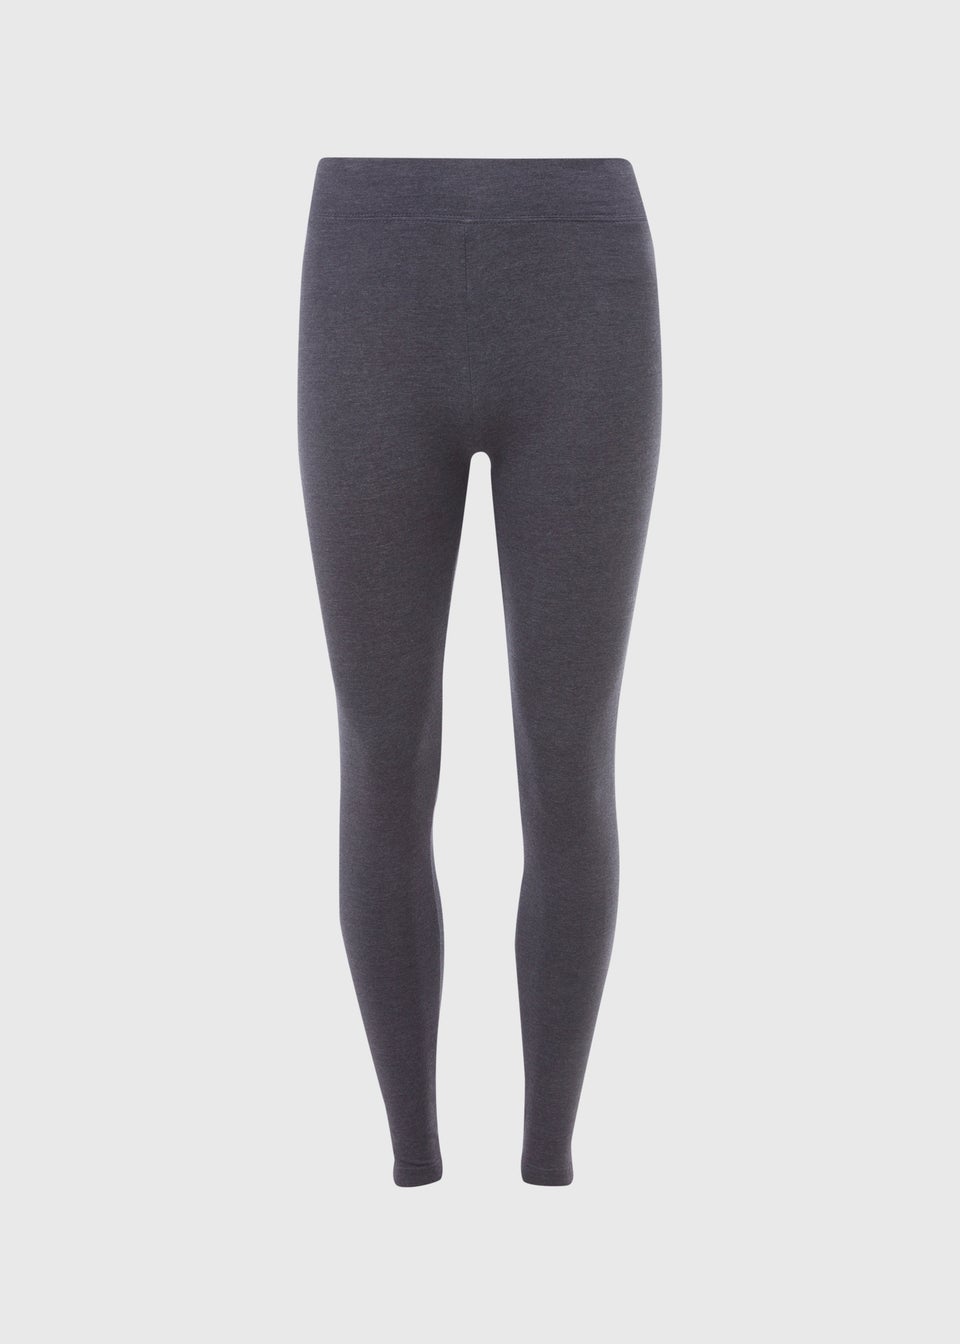 Buy TAG 7 Grey Cotton Leggings for Women Online @ Tata CLiQ